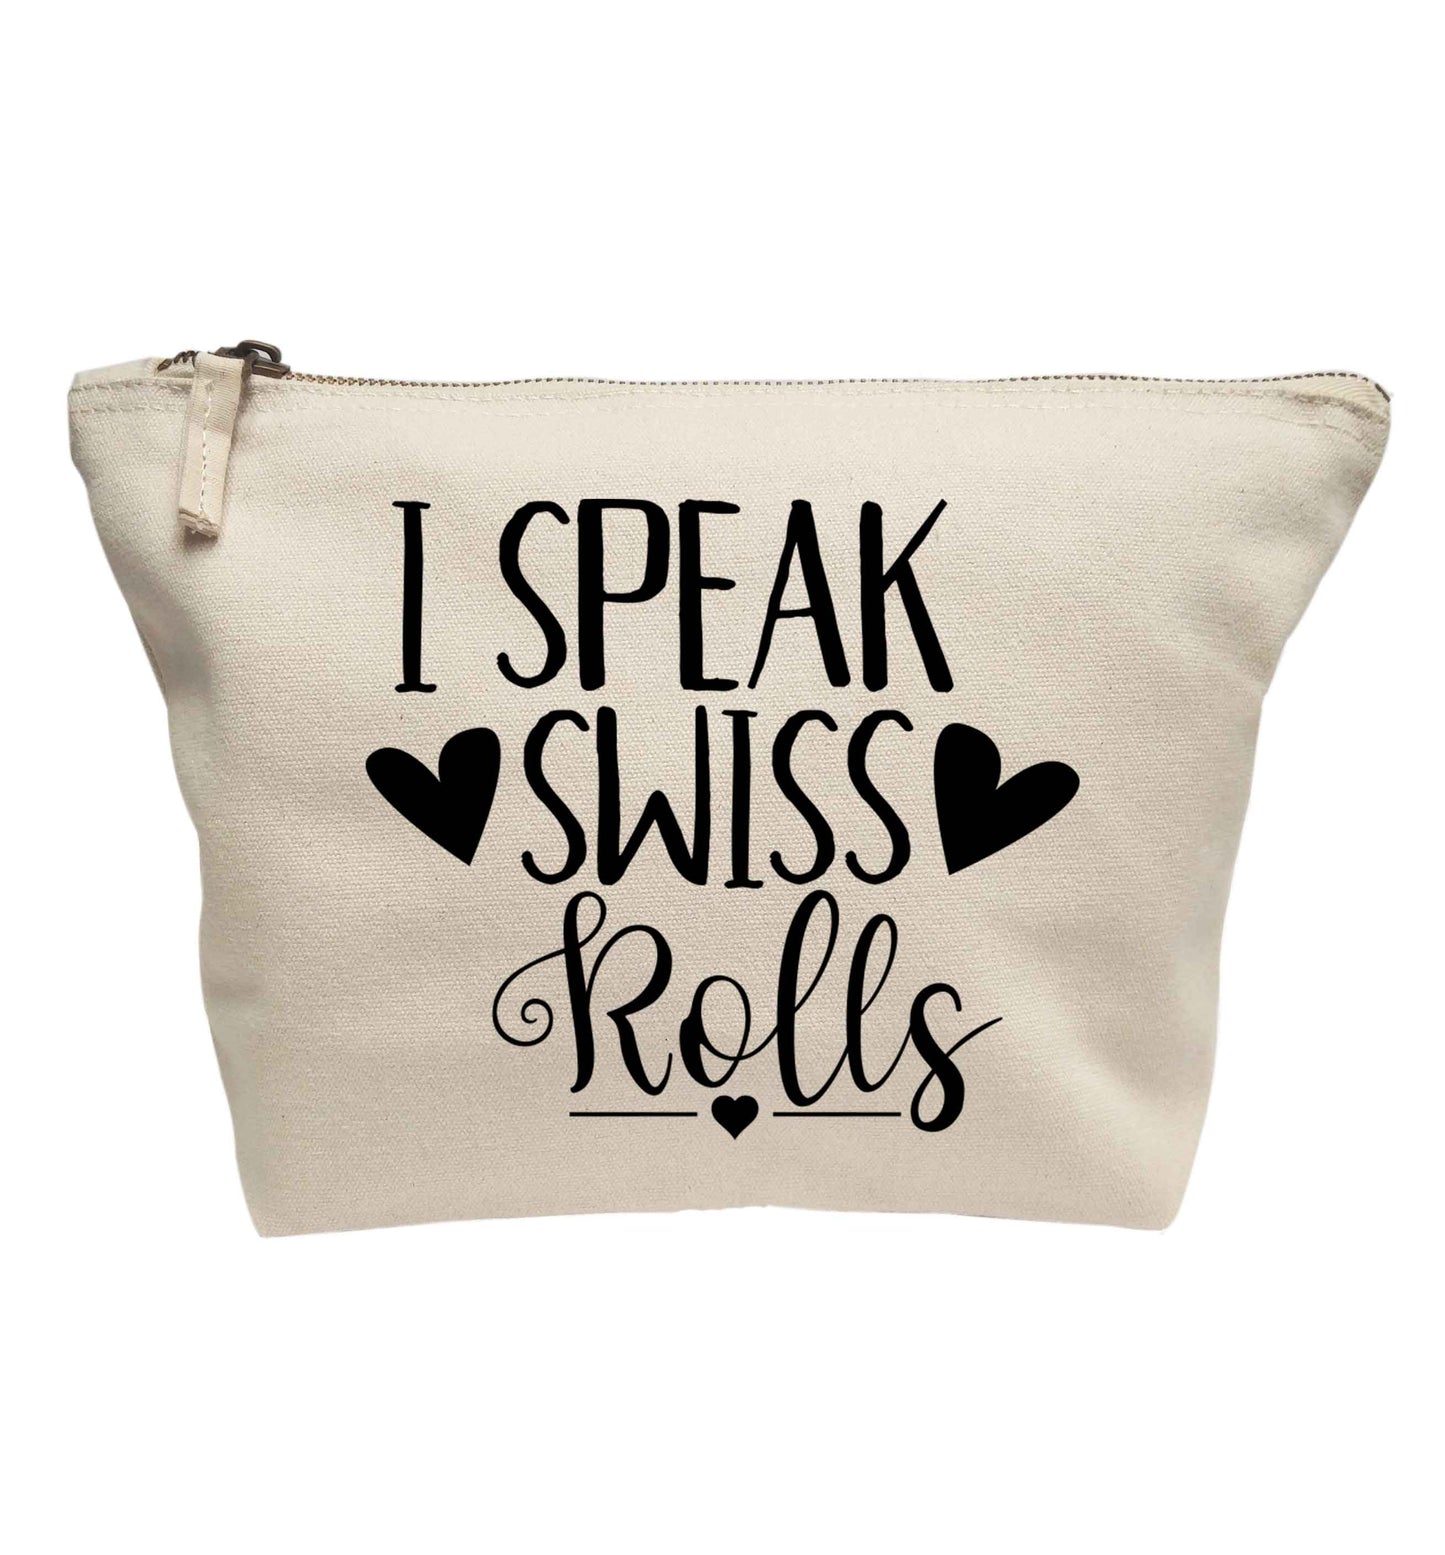 I speak swiss..rolls | makeup / wash bag